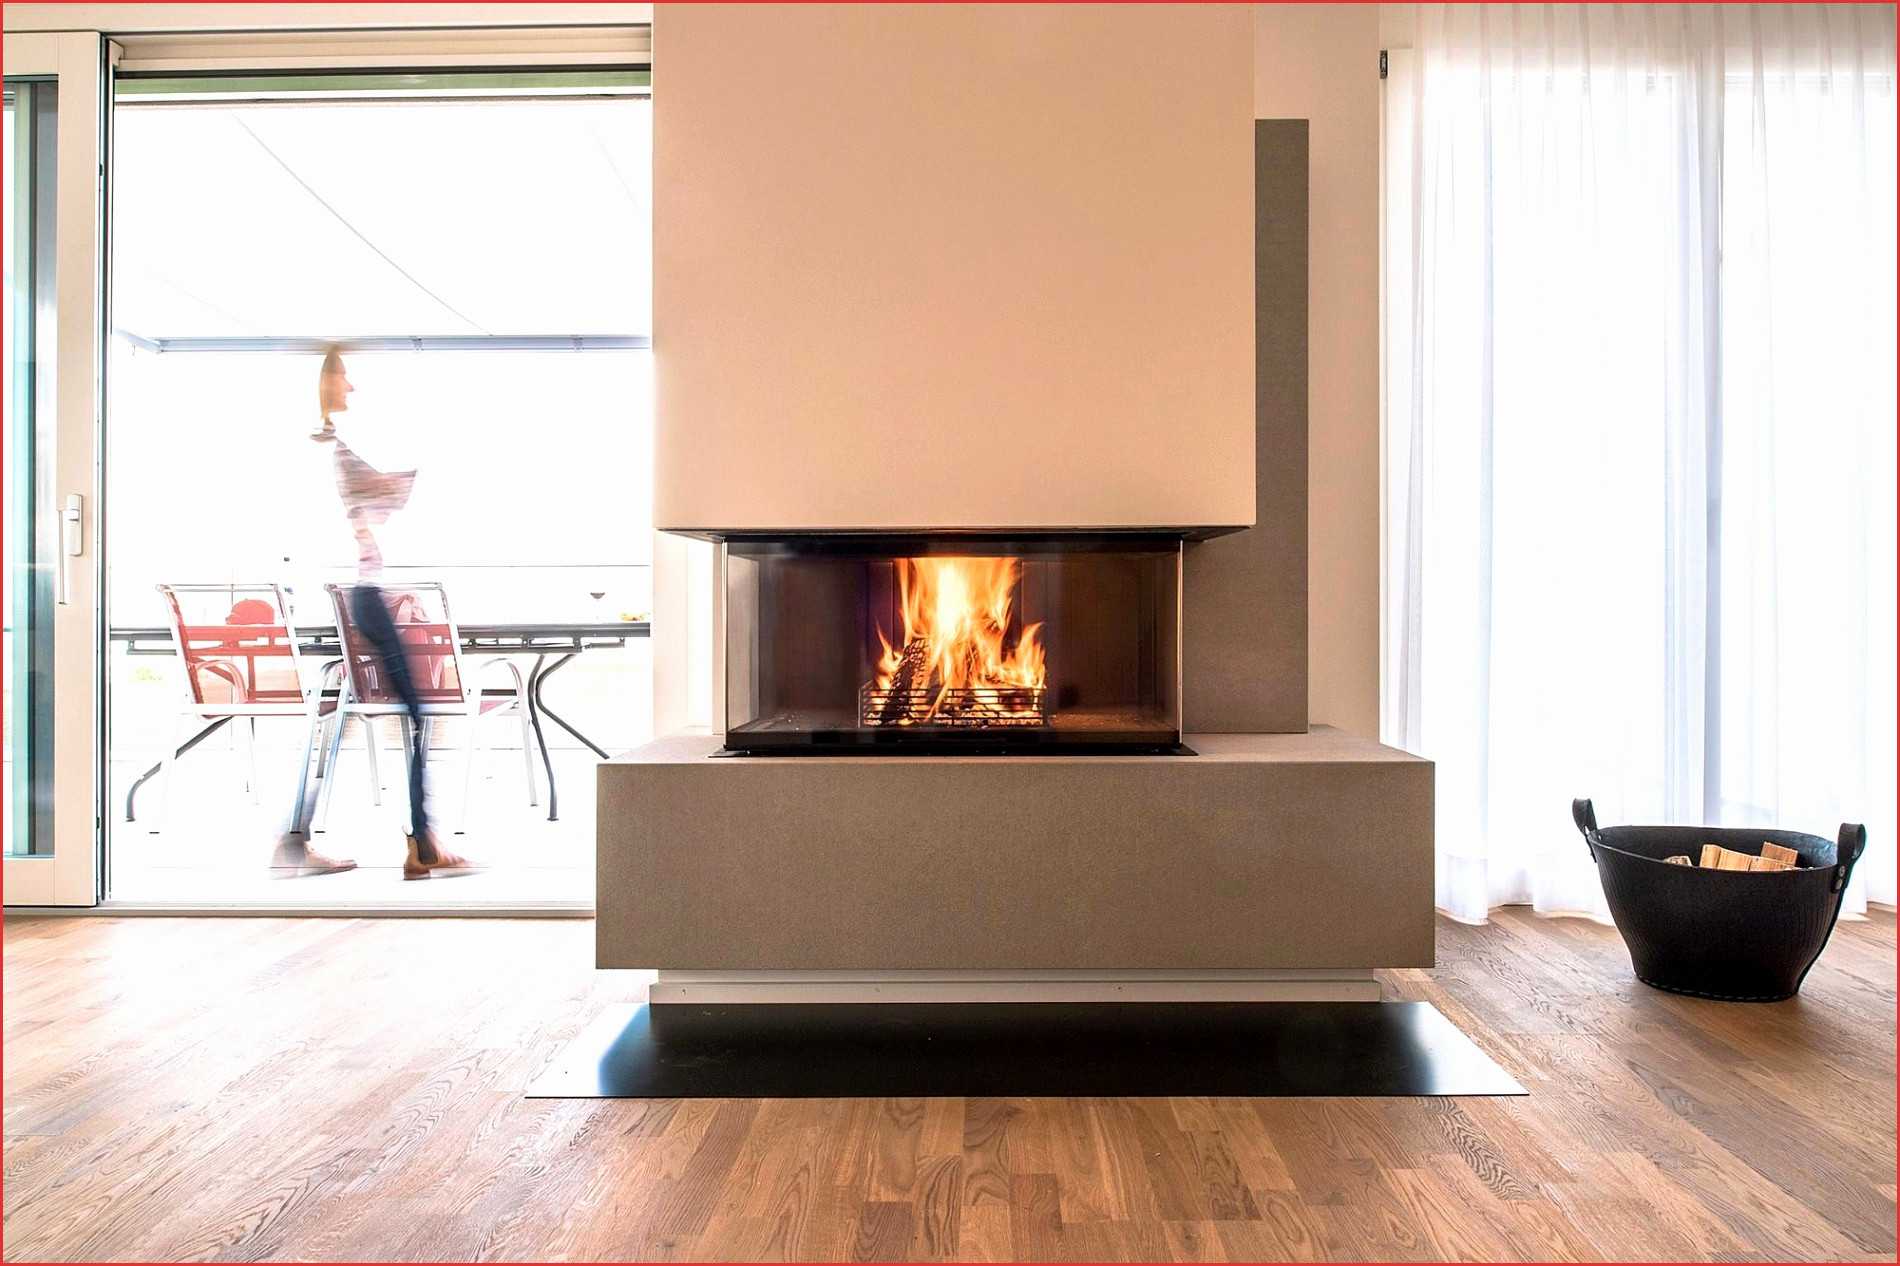 Fireplace Hood Awesome Moderner Holzofen Luxus Kamin In Der Wand Frisch Moderne